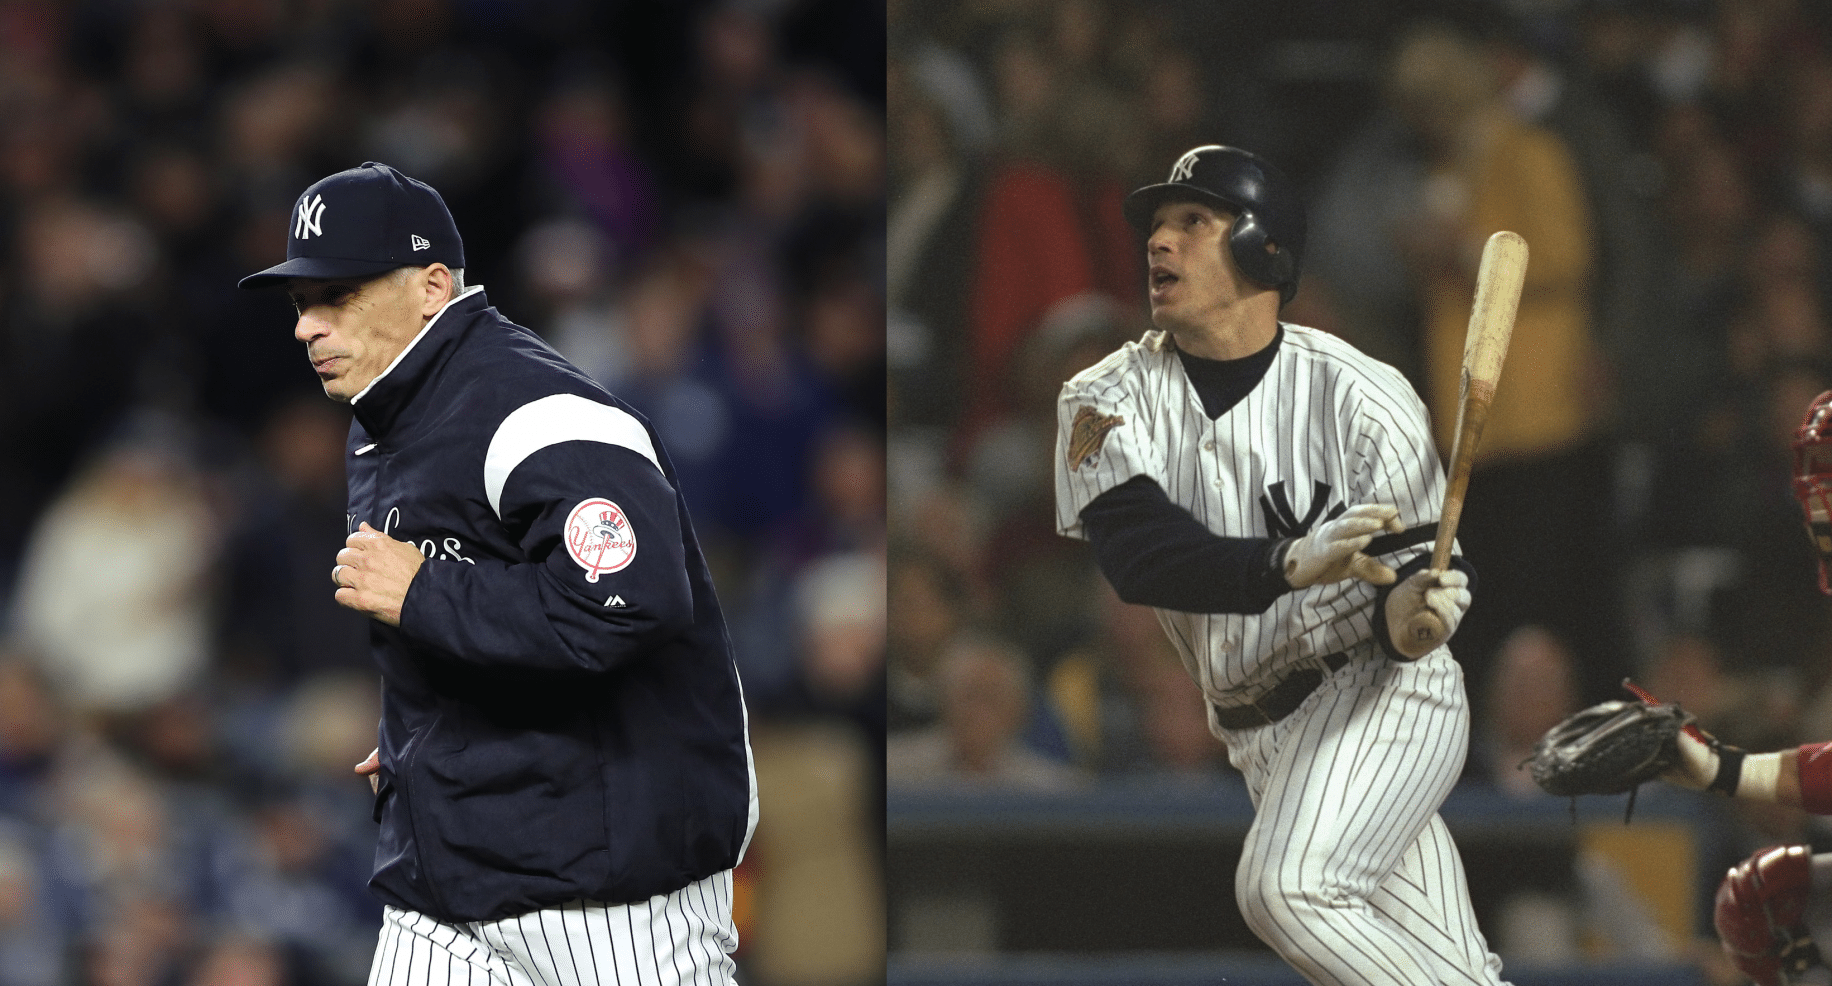 New York Yankees Baby Bombers Act Provides Nostalgic 1996 Feel 1